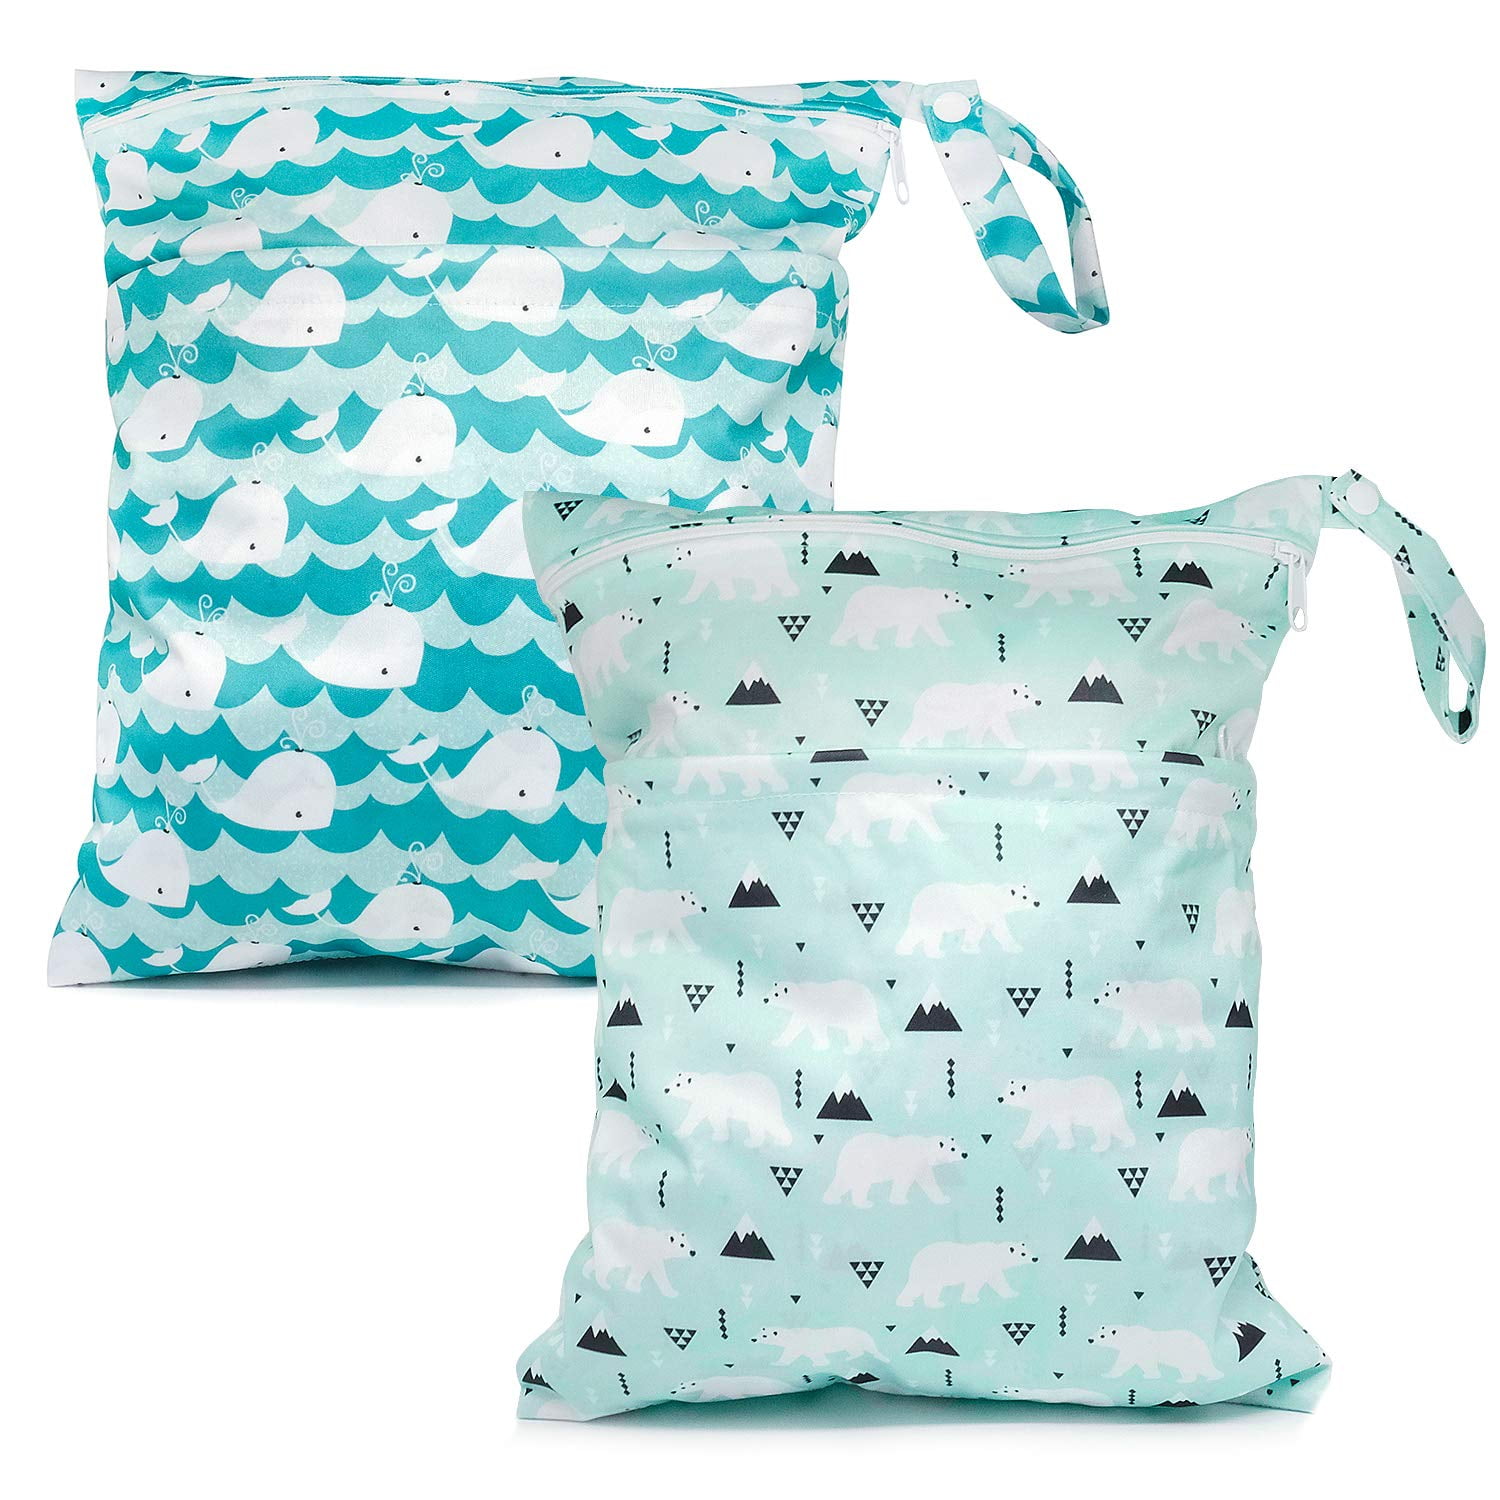 OUNONA 1 Set of 5pcs Baby Diaper Bag Sets changing Nappy Bag For Mom  Multifunction Stroller Tote Bag Organizer 